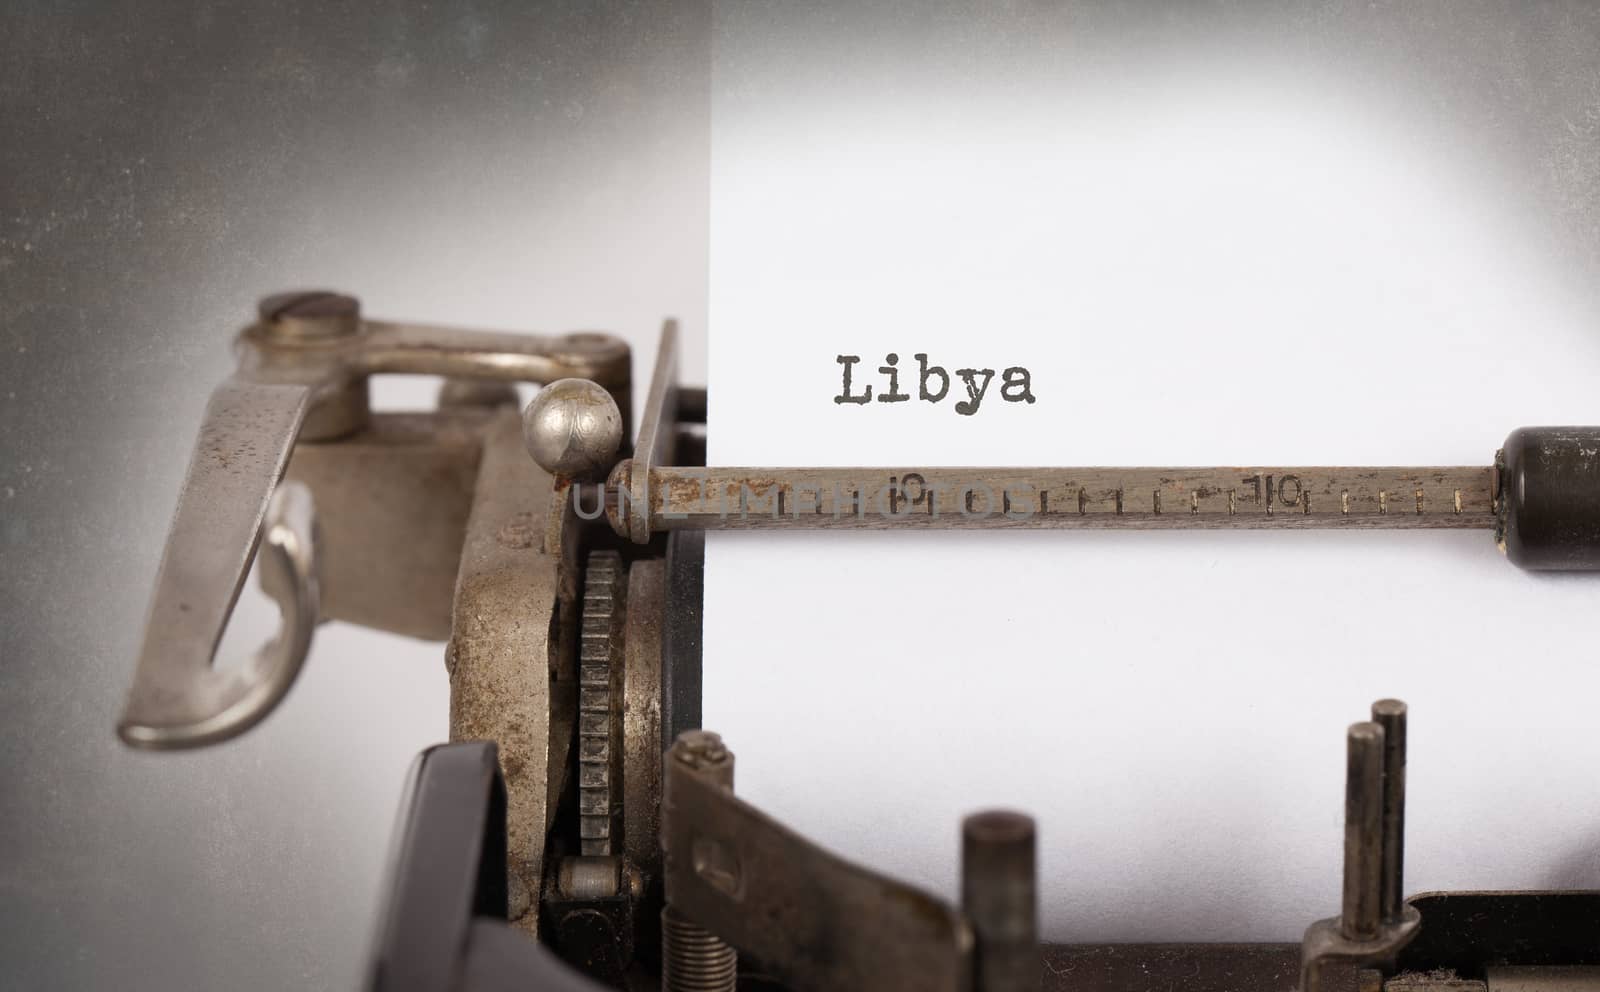 Old typewriter - Libya by michaklootwijk